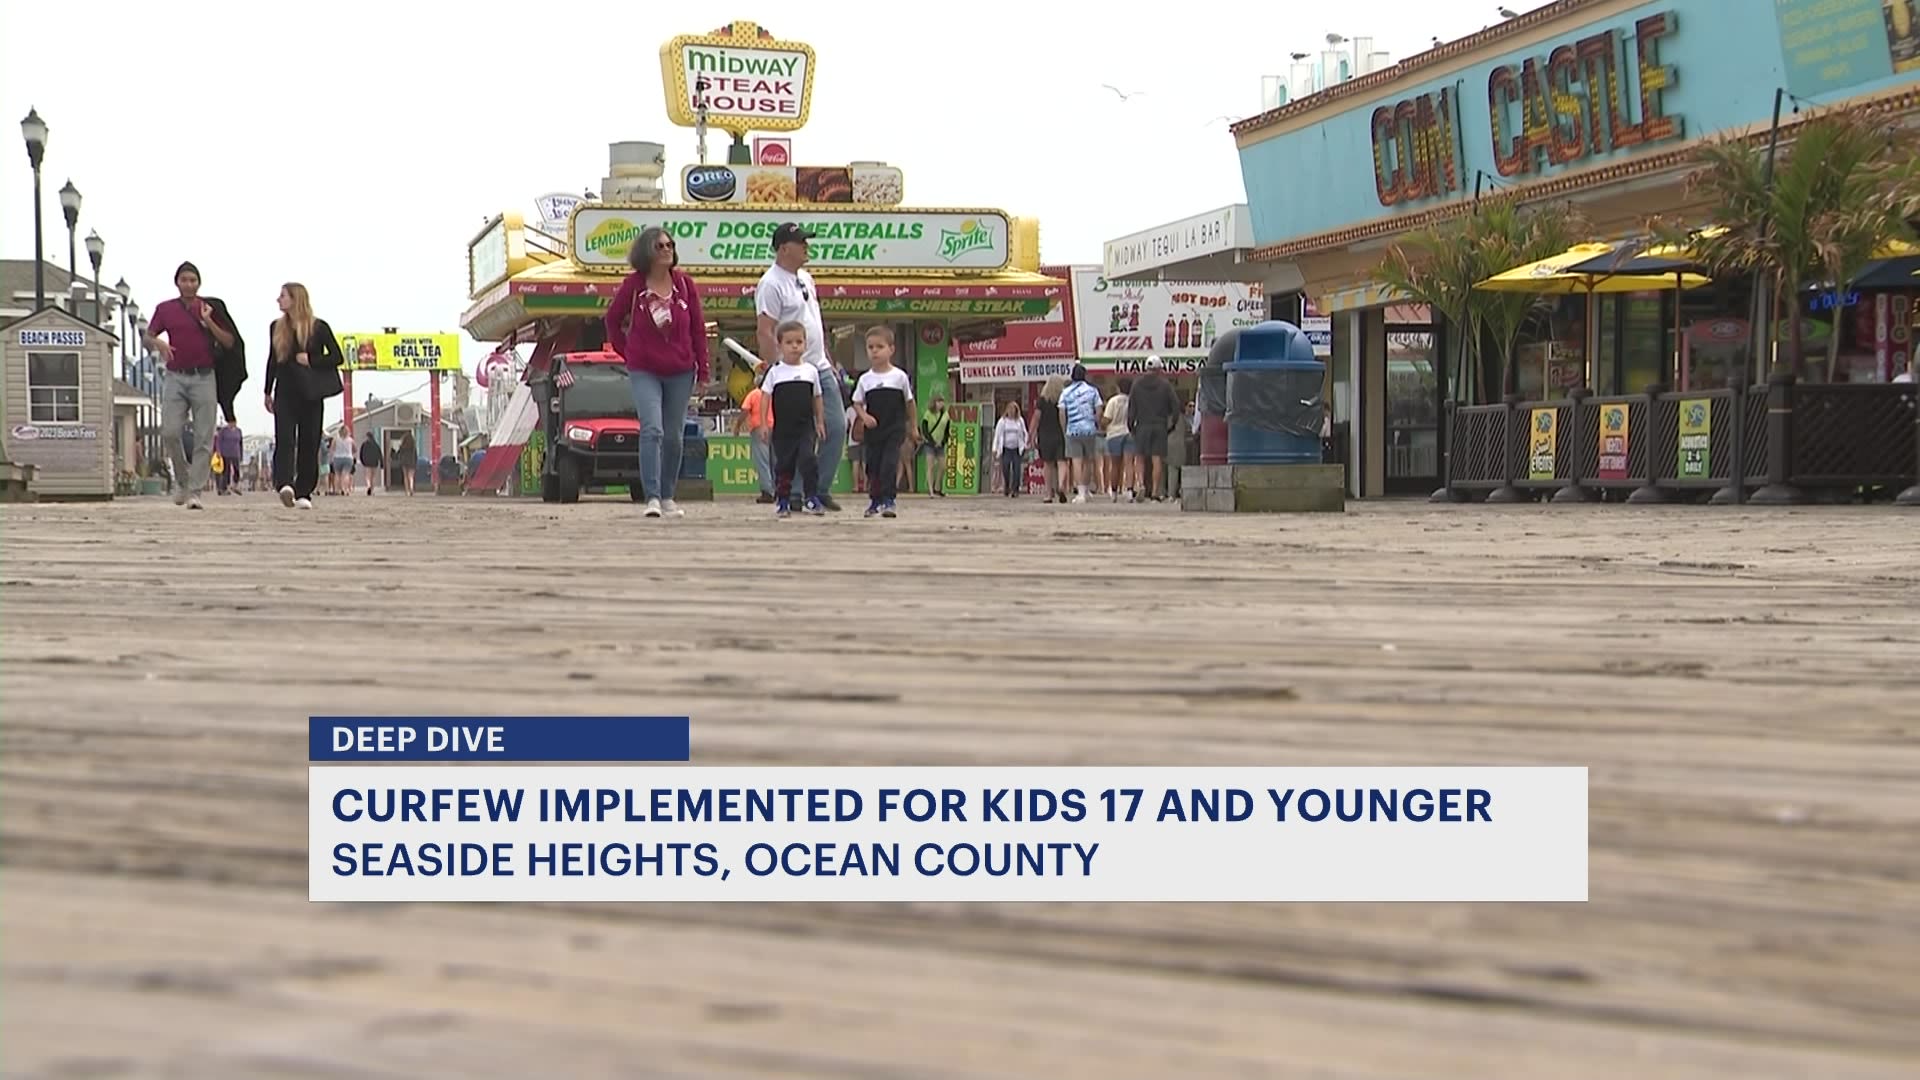 DEEP DIVE Seaside Heights implements new boardwalk curfew for teens